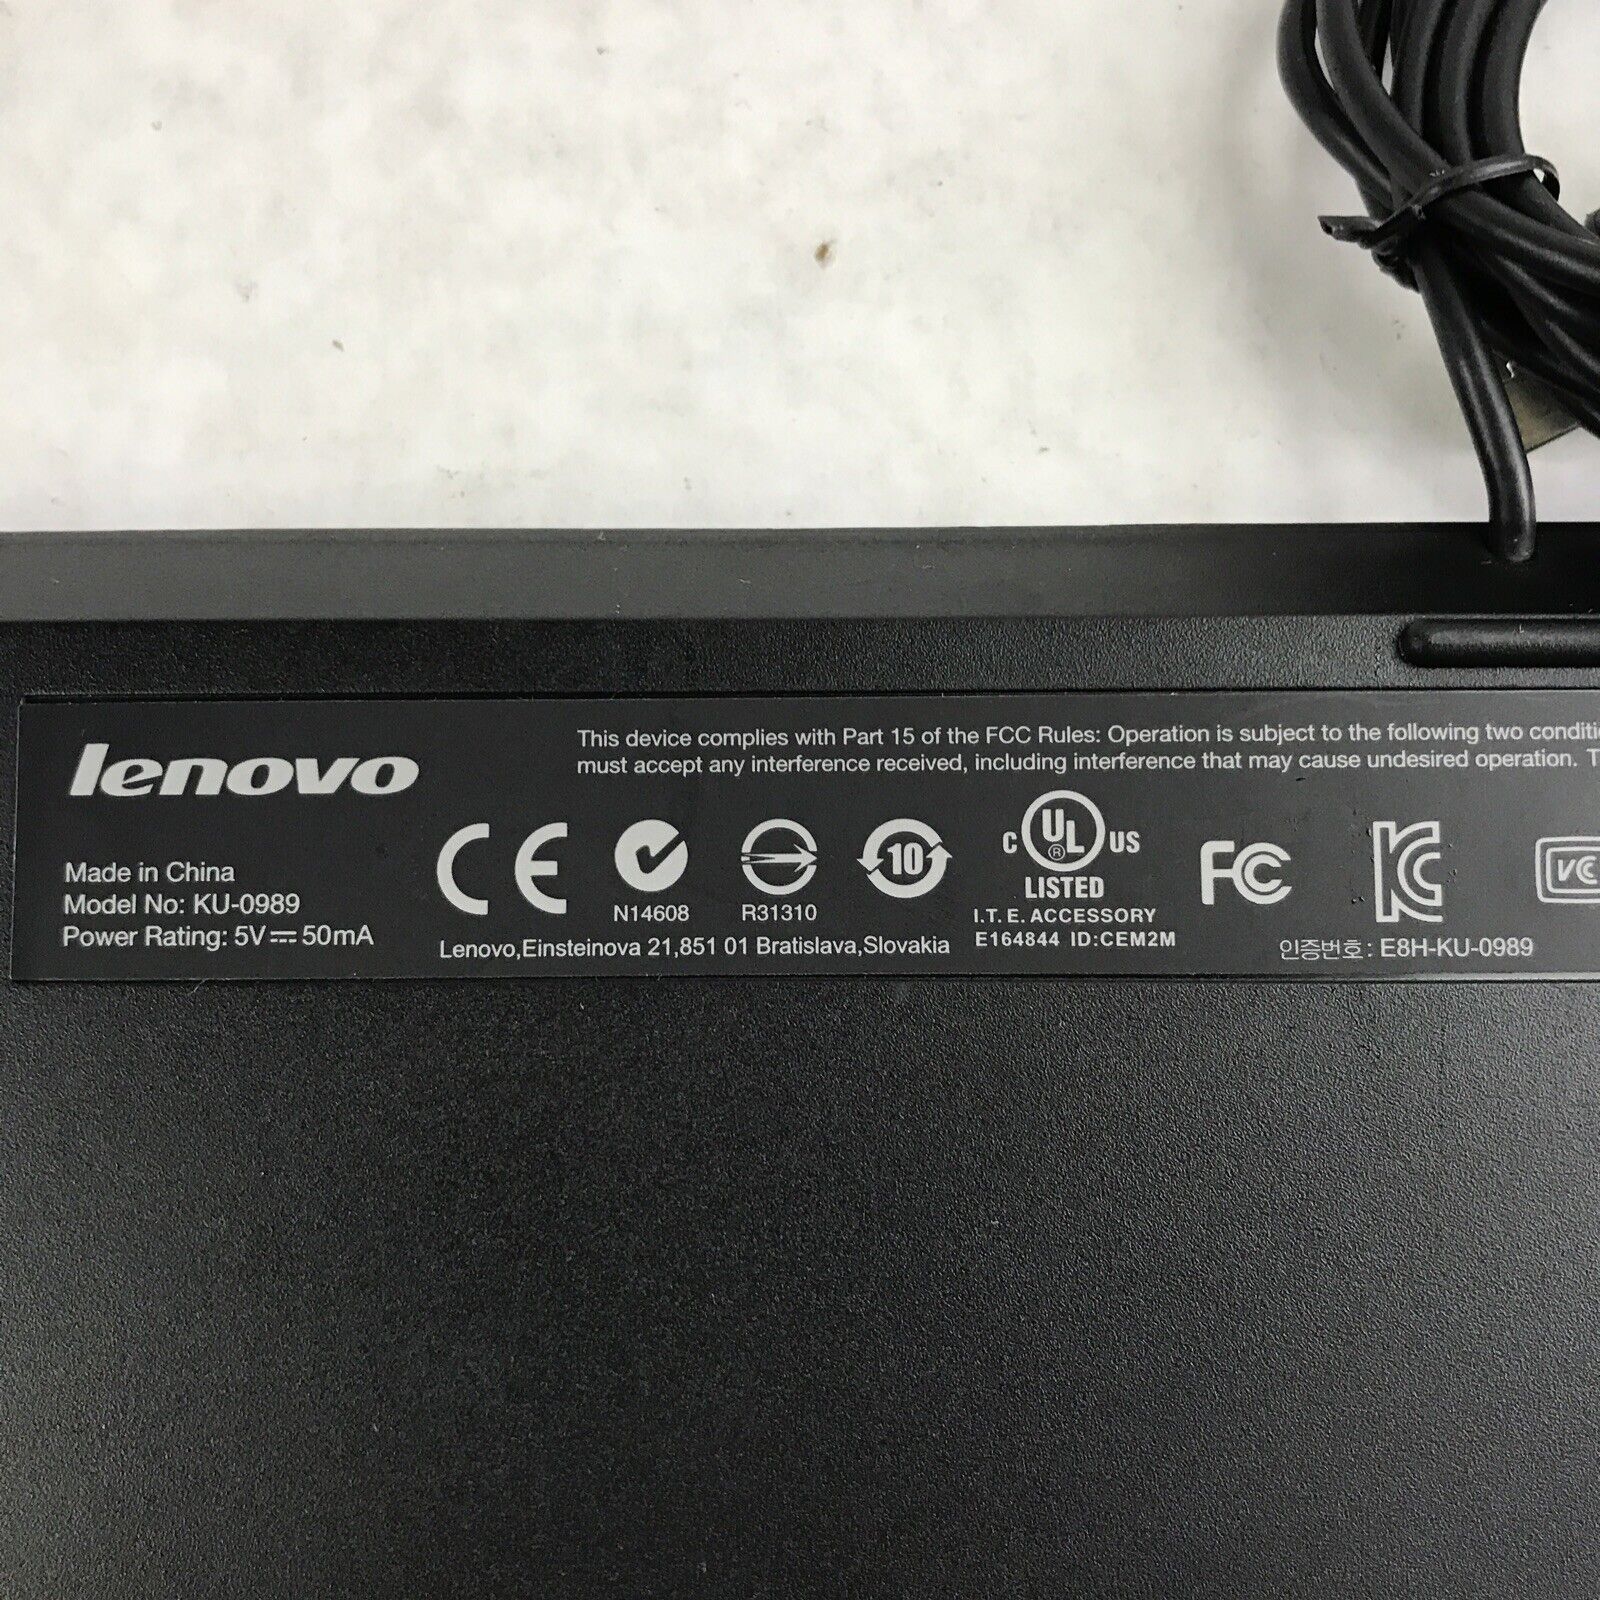 Lenovo KU-0989 Black Wired USB Desktop E8H-KU-0989 Computer Keyboard 54Y9489